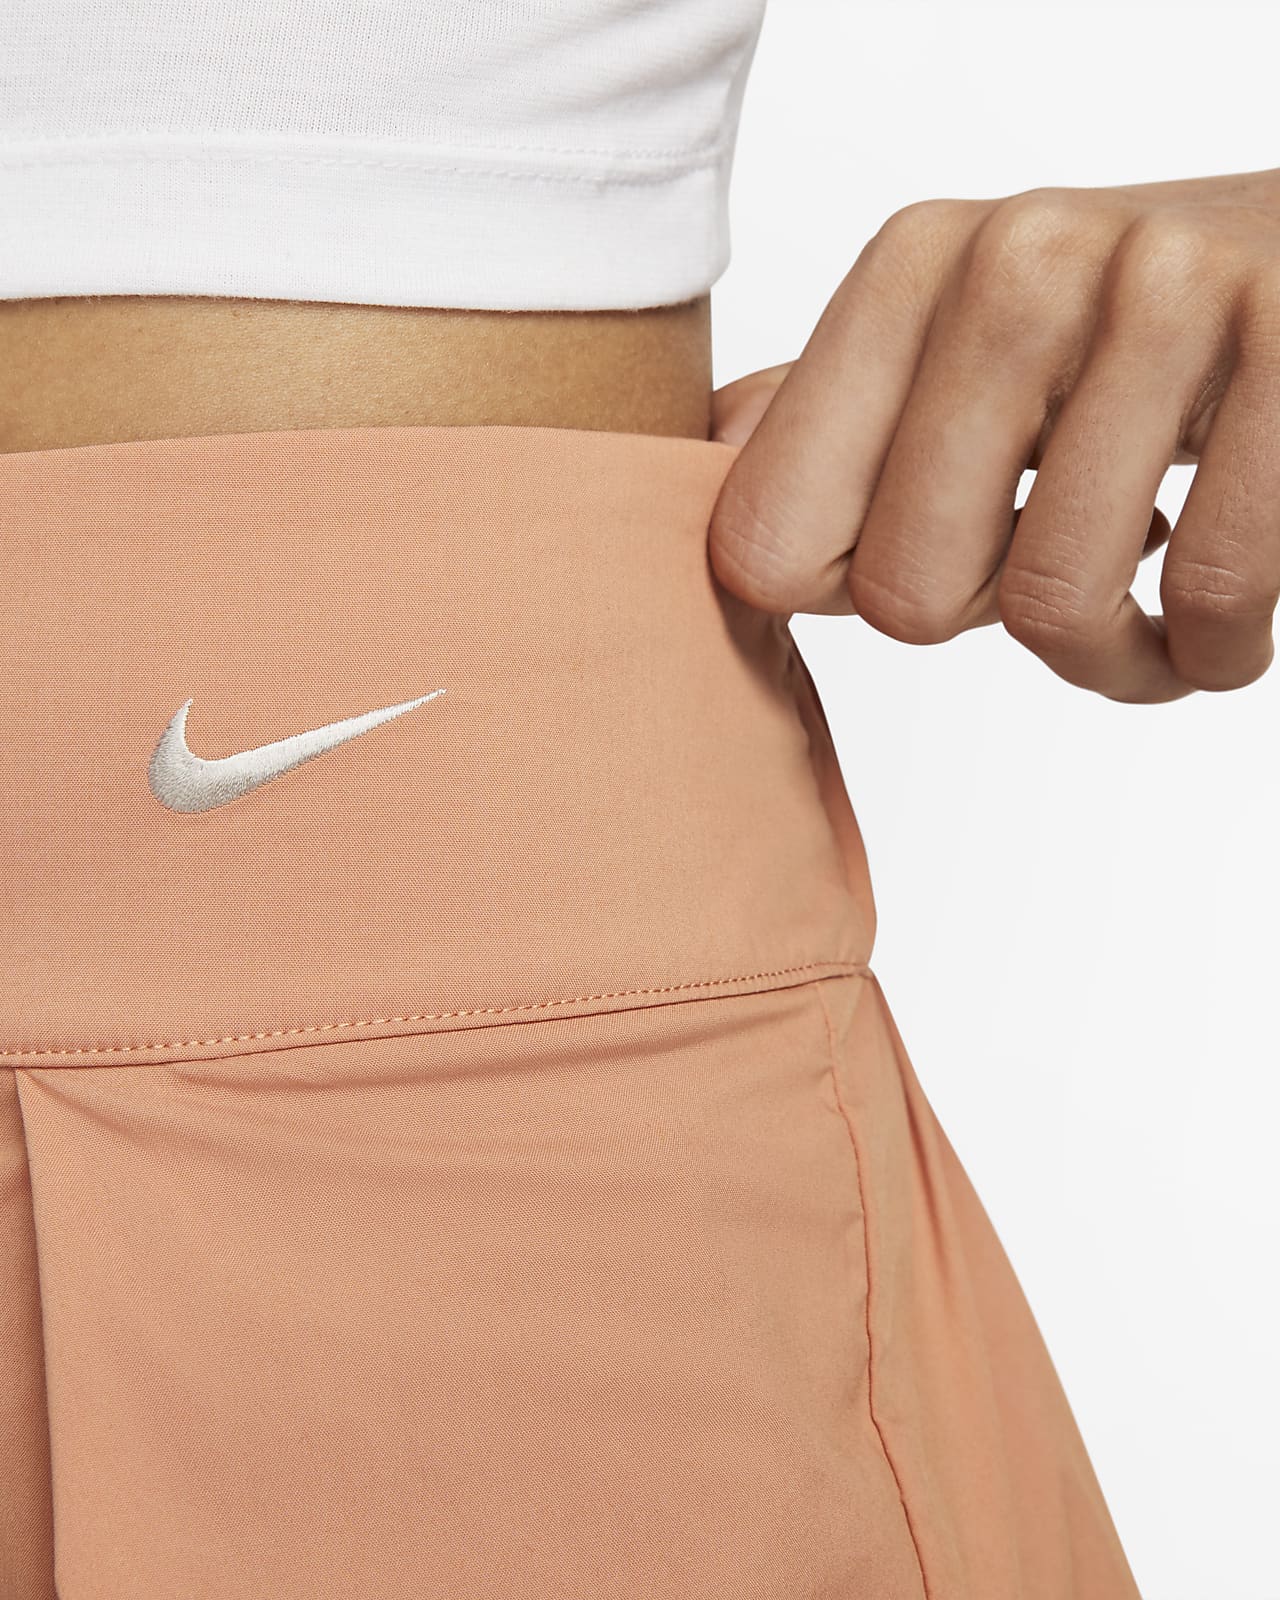 Nike Collection Women\'s Sportswear Trouser Shorts.